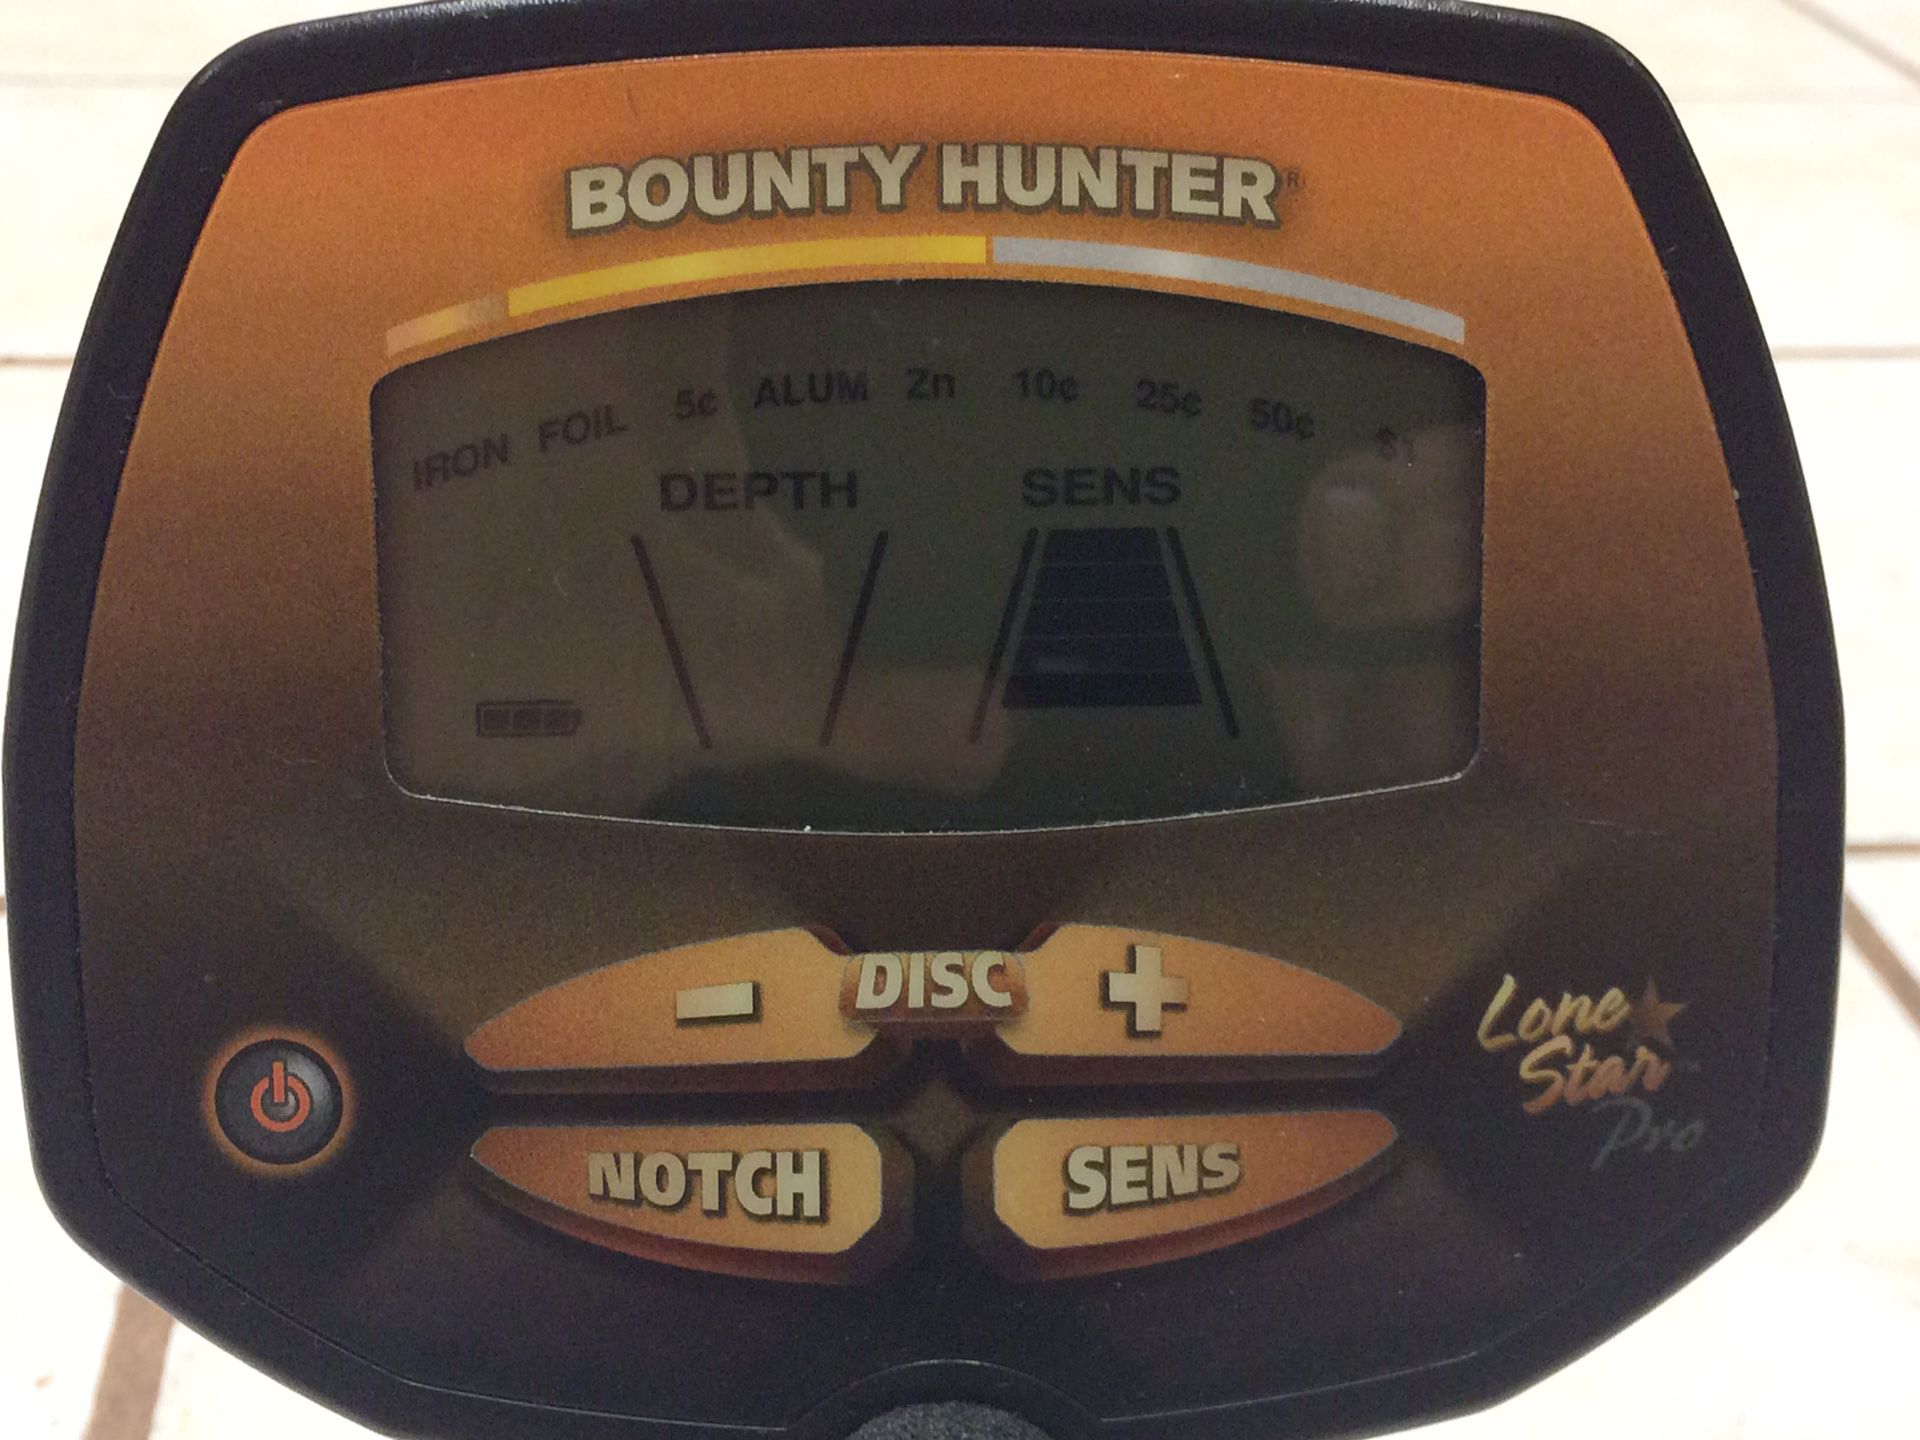 Bounty hunter lone star pro metal detector